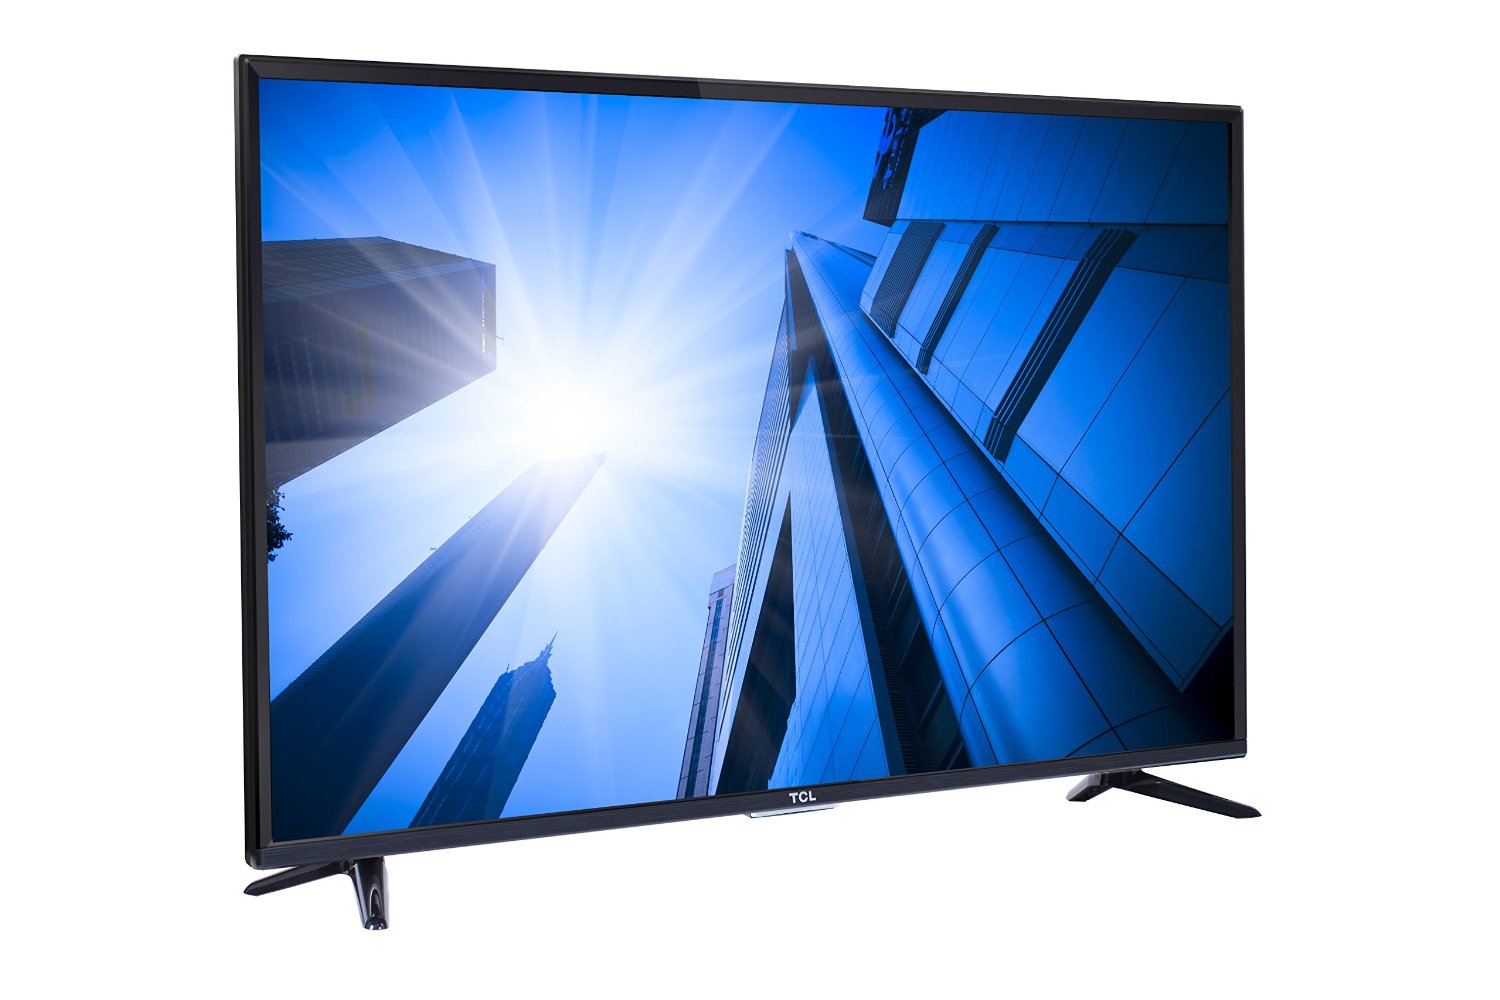 TCL 48FD2700 48-Inch 1080p LED TV (2015 Model)